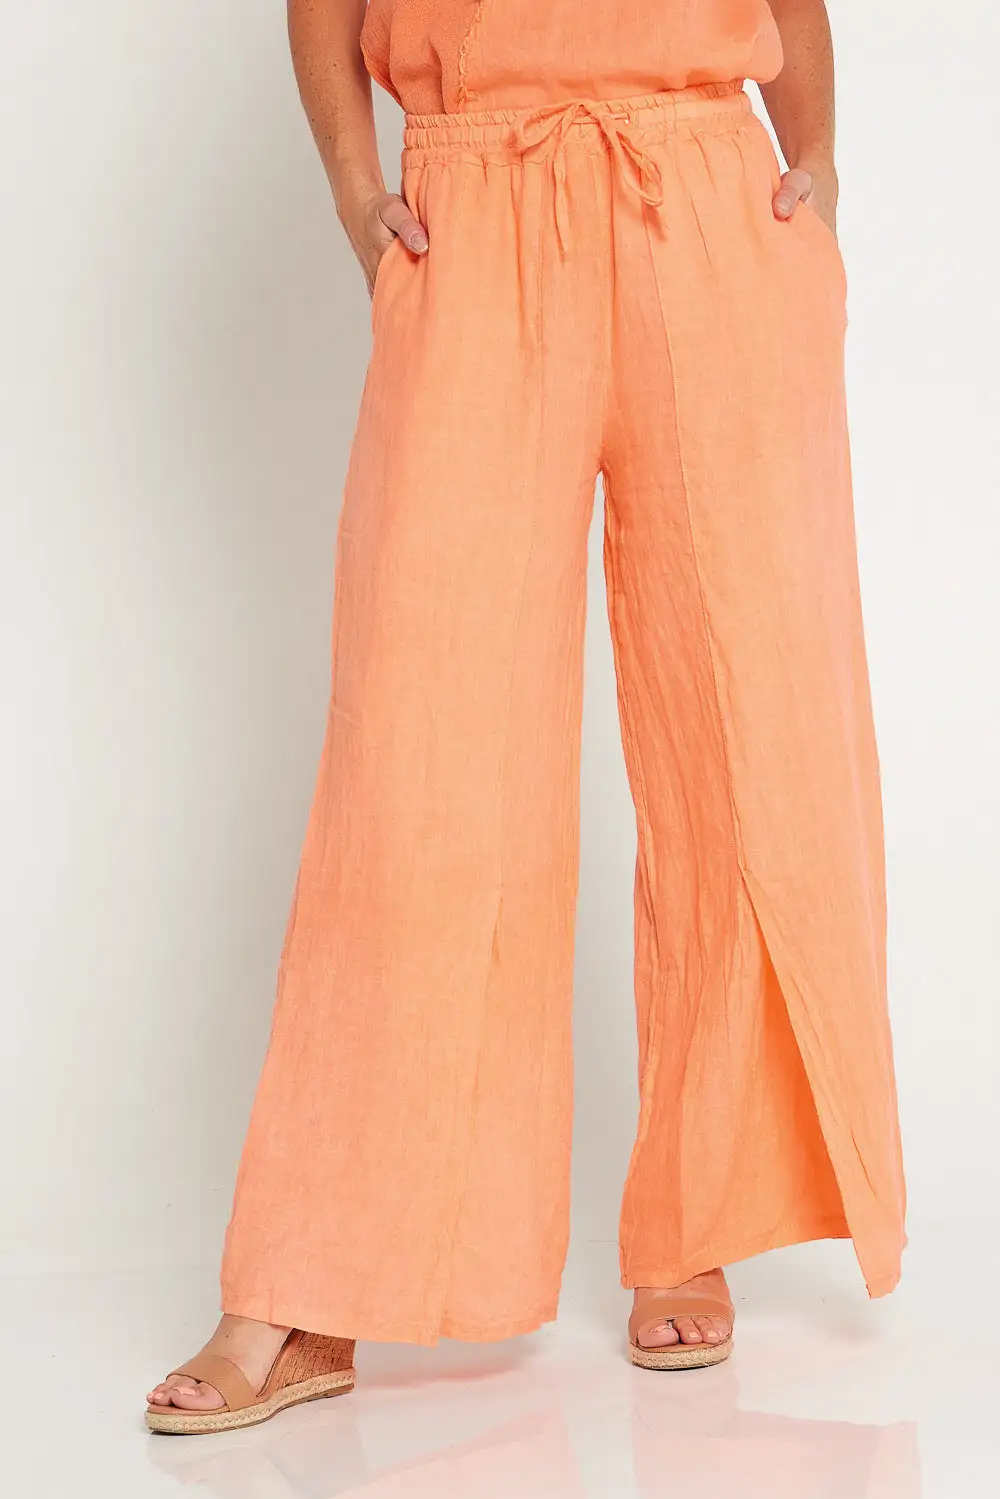 Ithaca Linen Pants - Peach